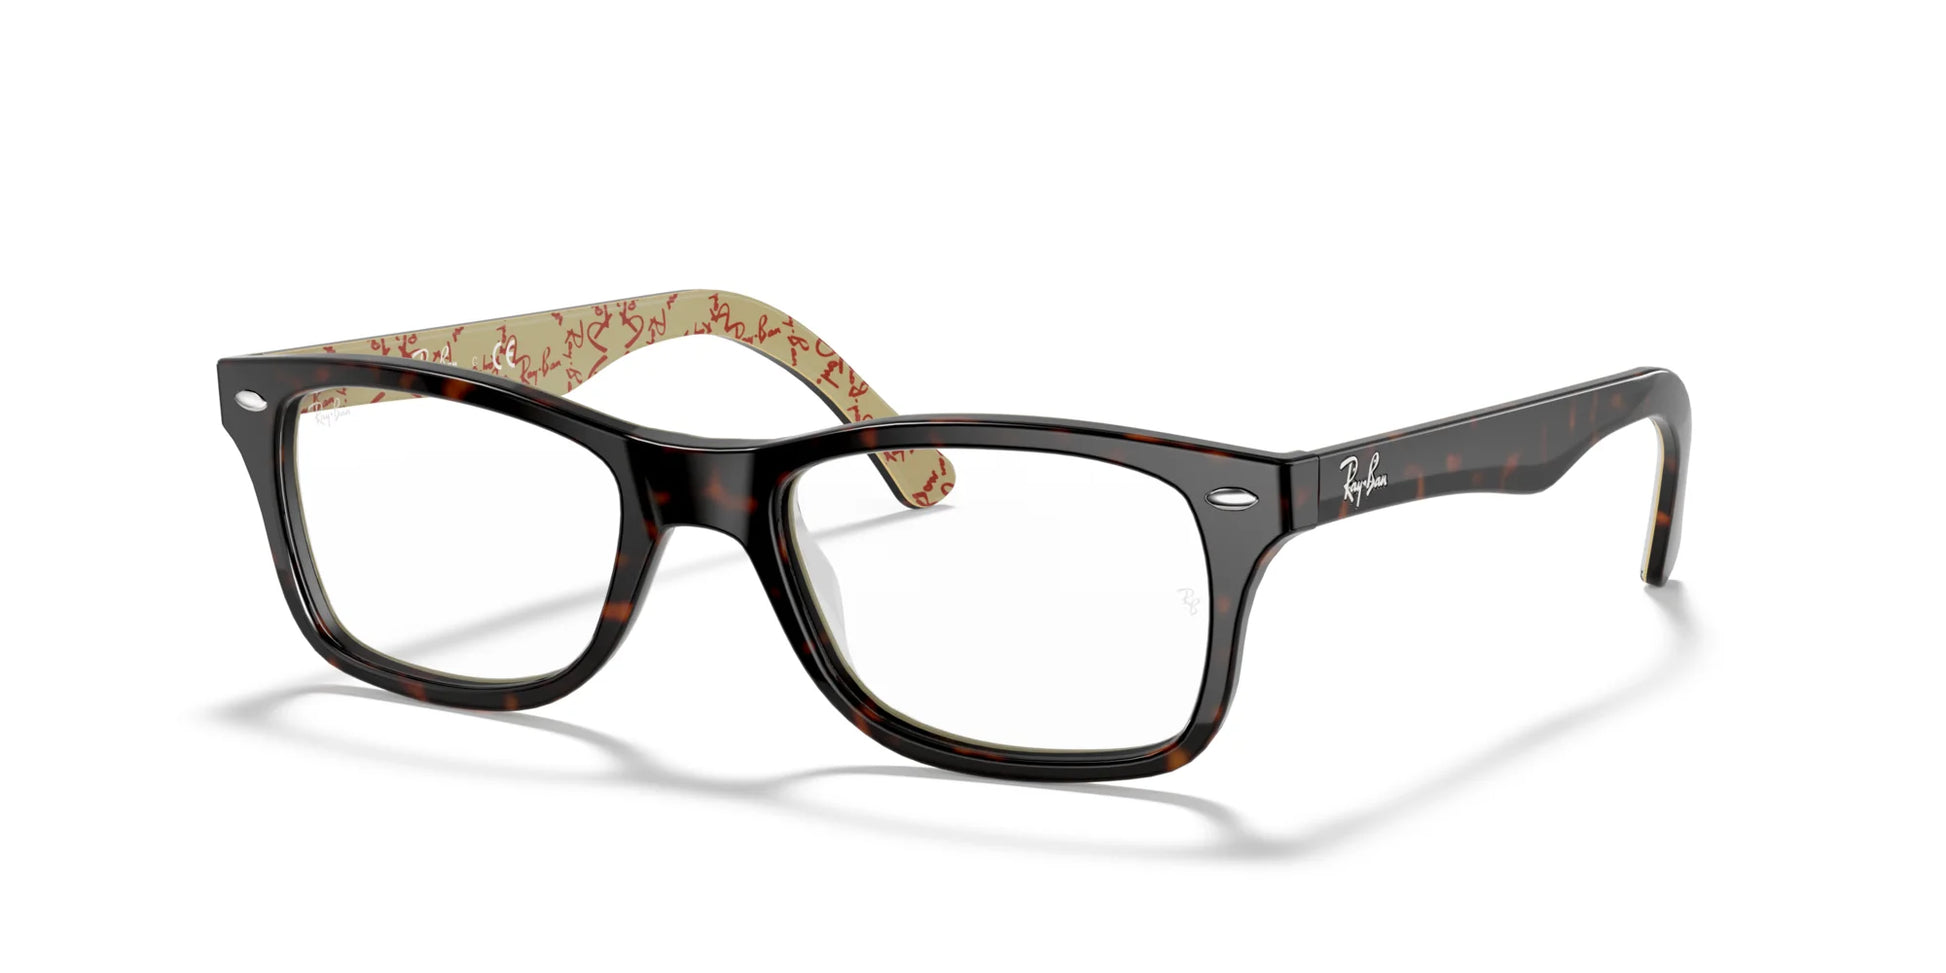 Ray-Ban RX5228 Eyeglasses Dark Havana On Beige Texture / Clear